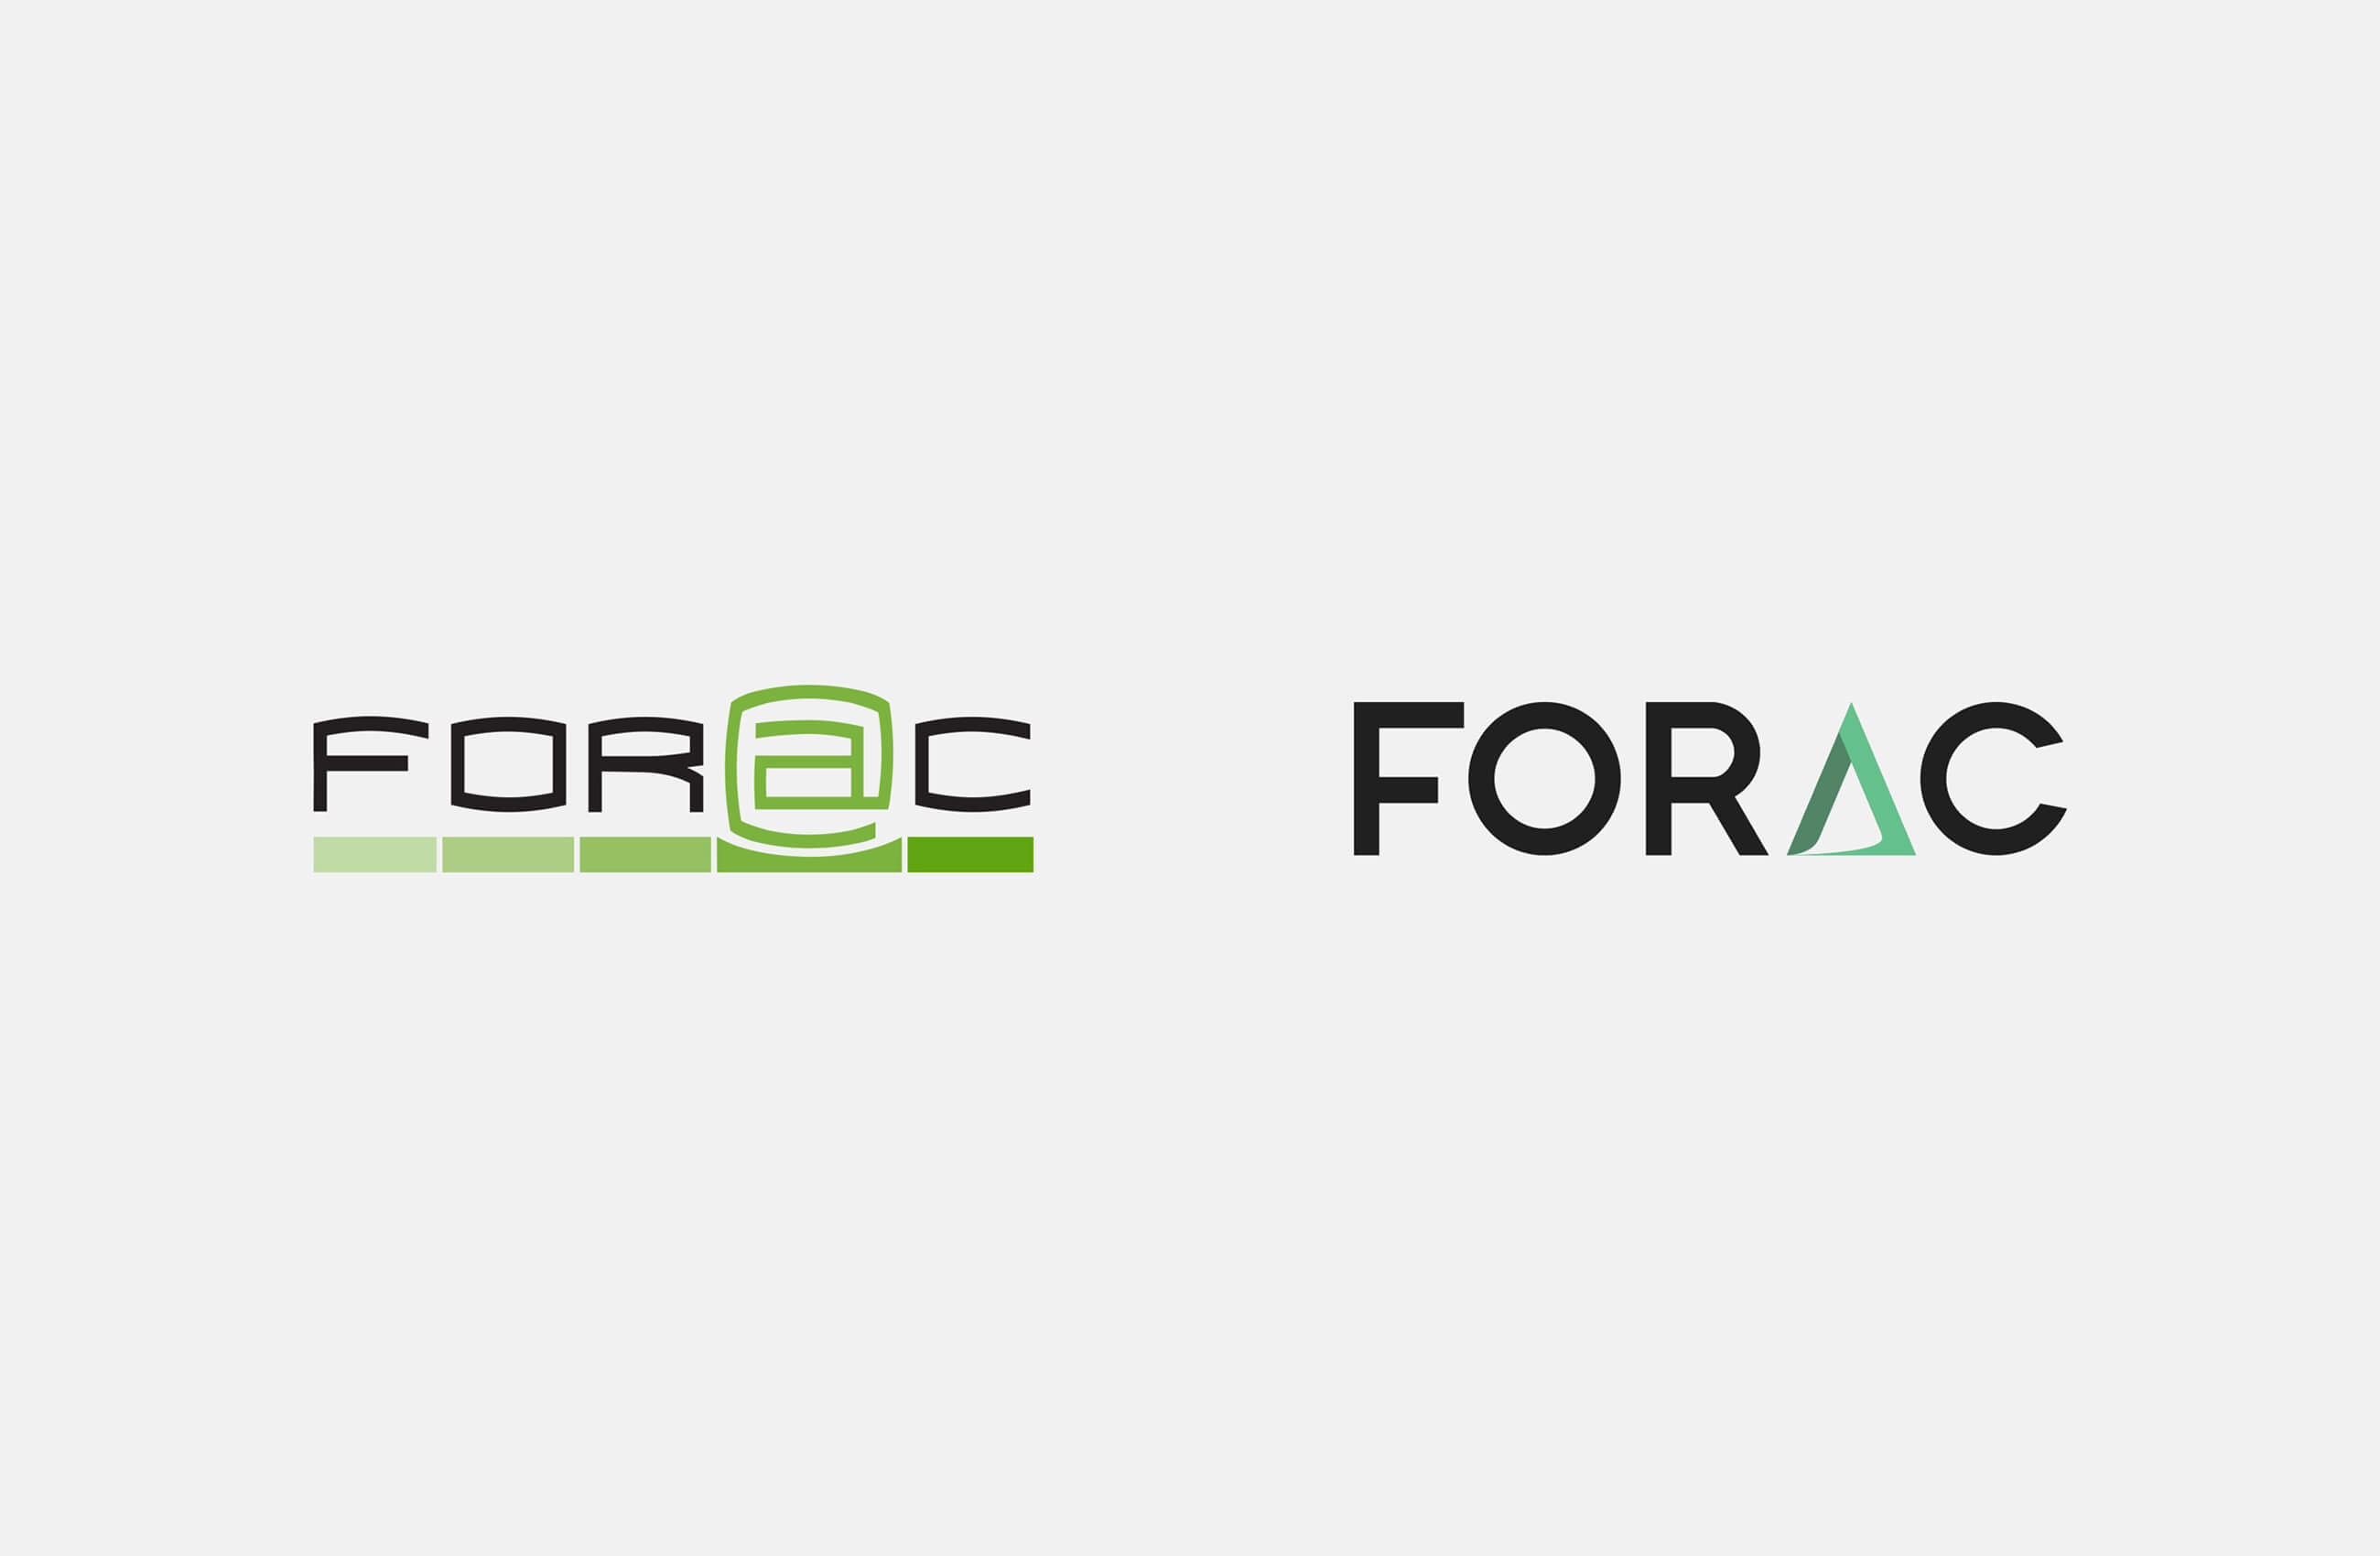 Logo comparaison FORAC